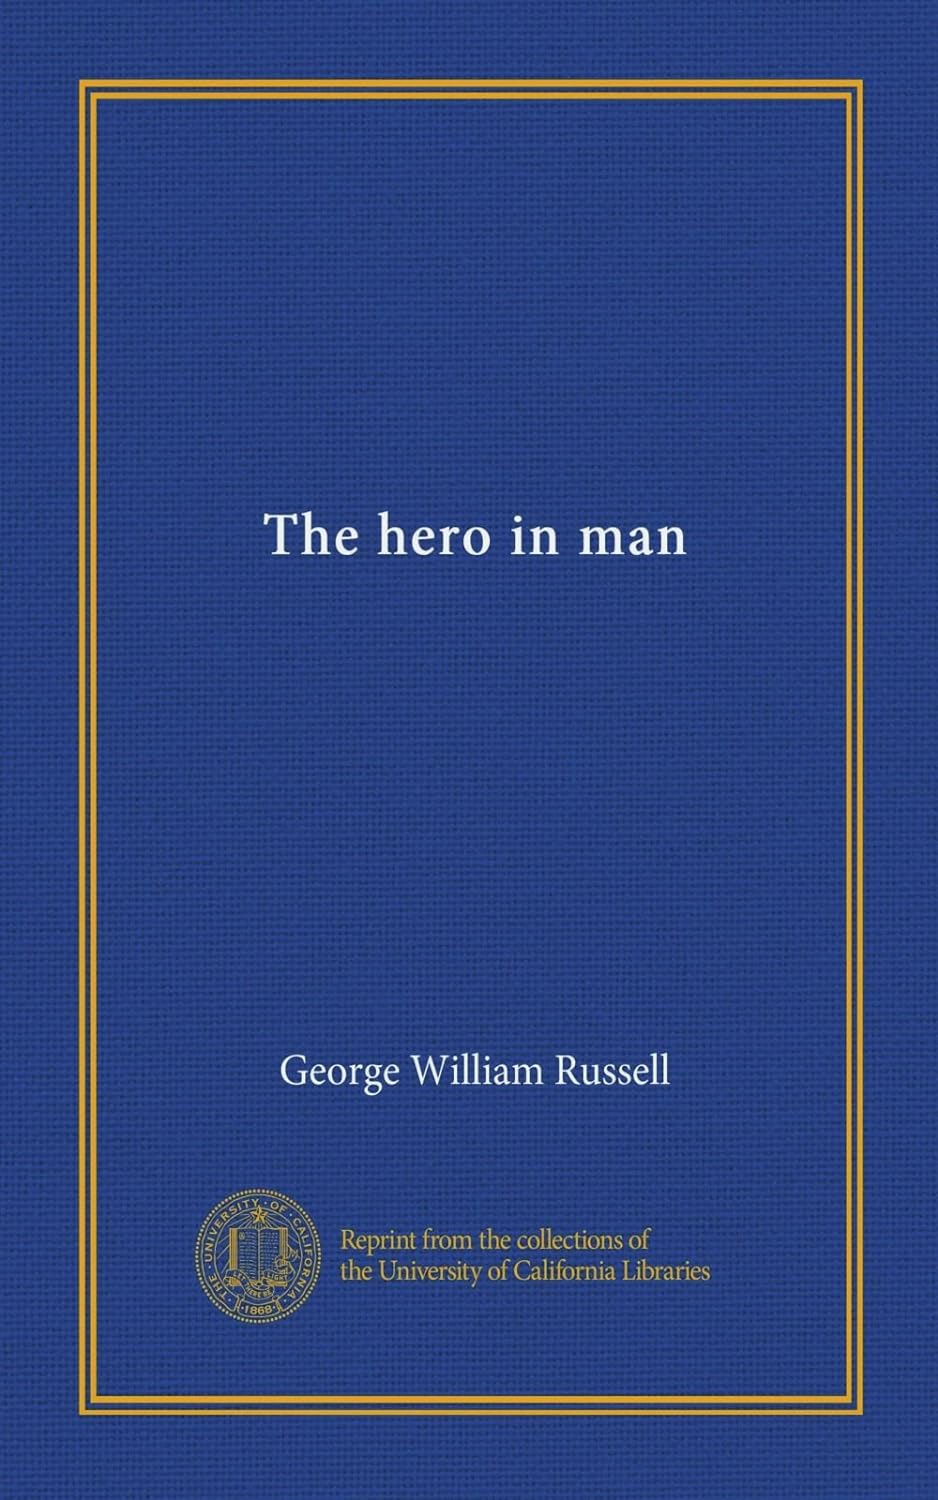 The hero in man